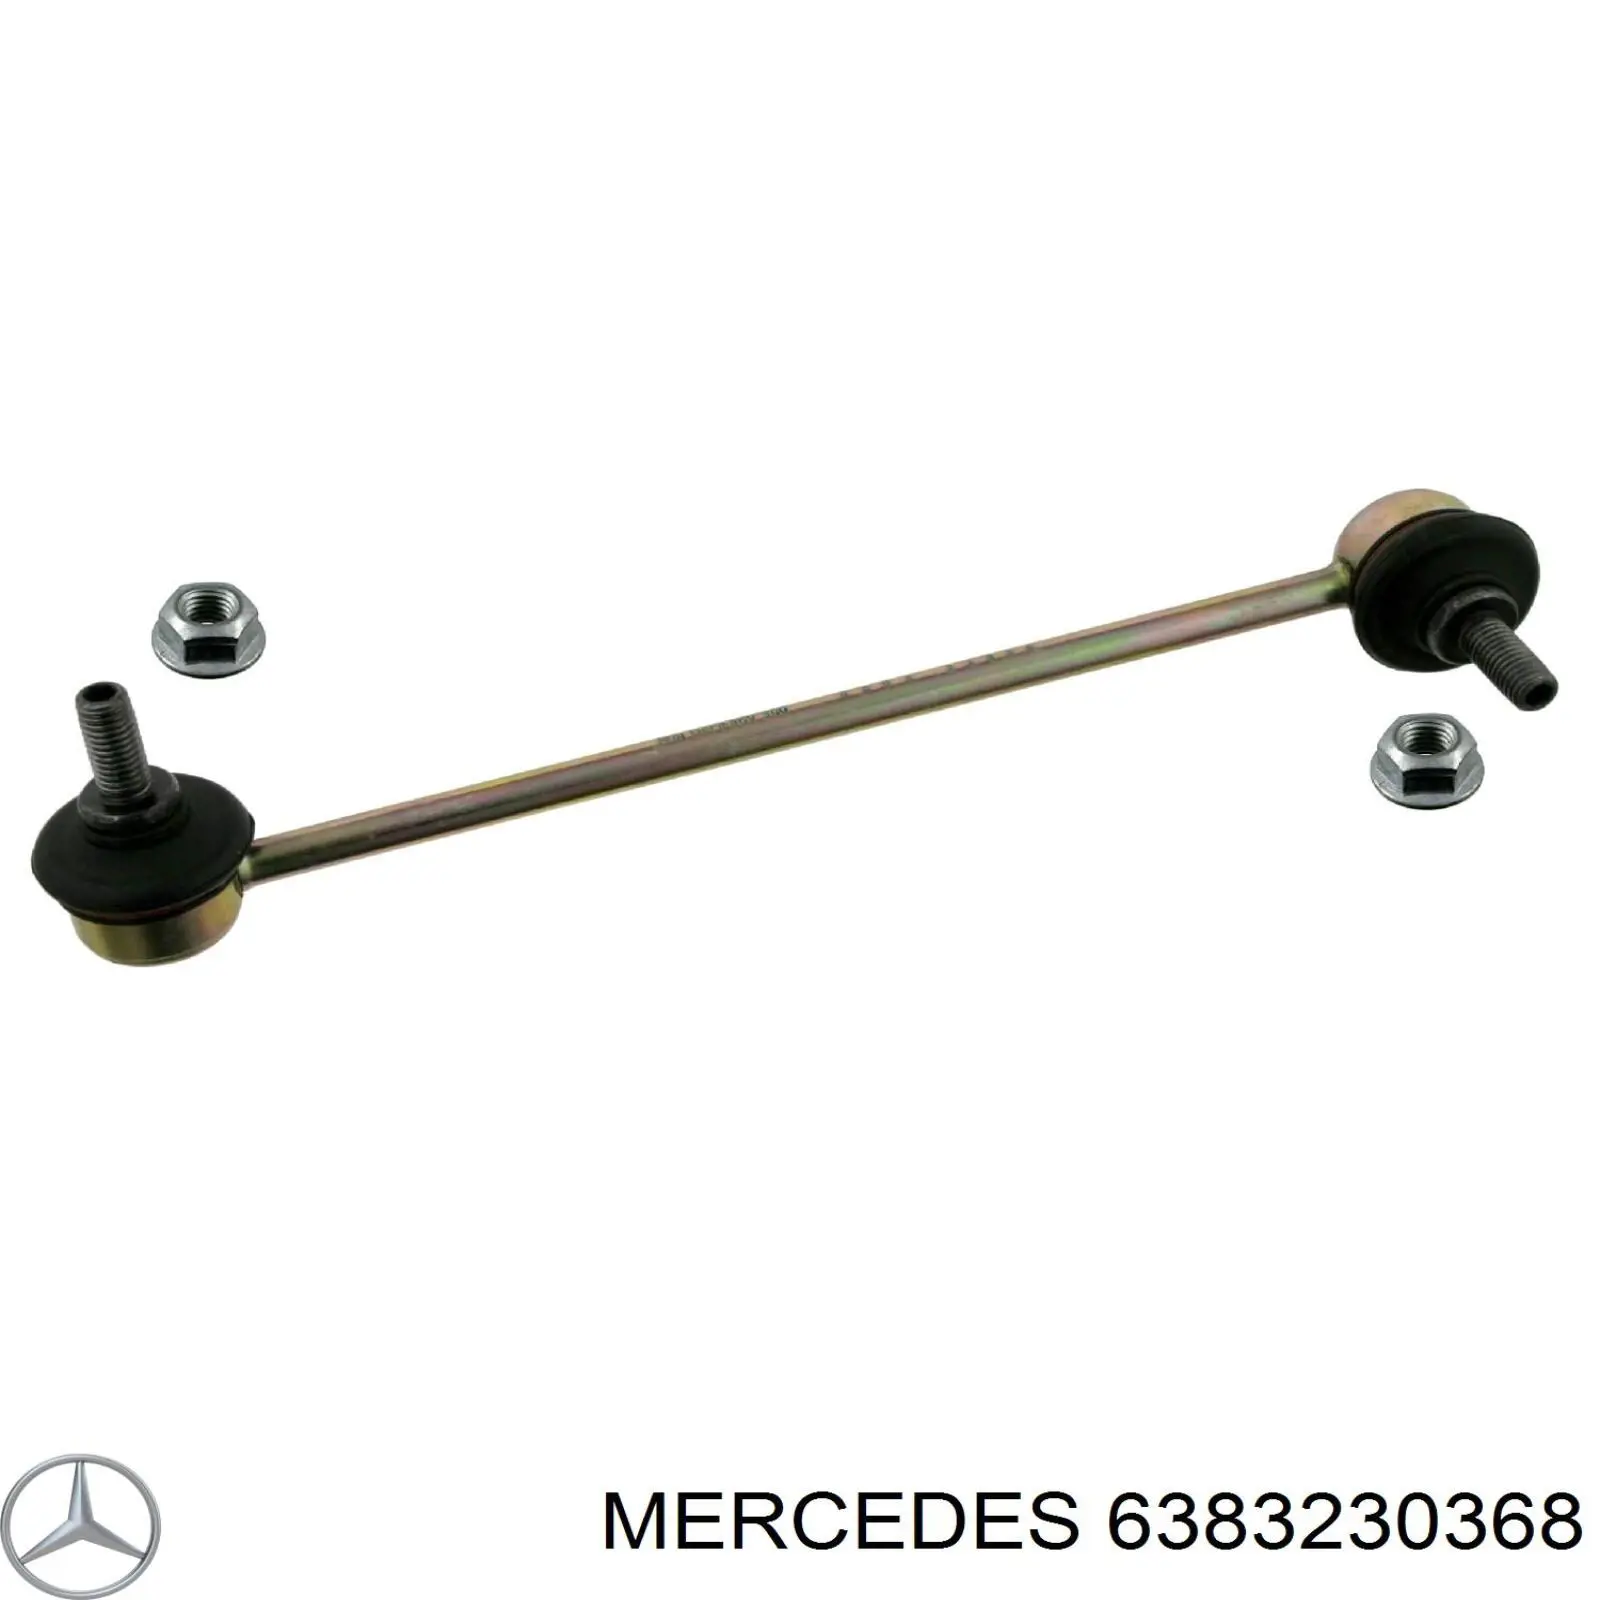 6383230368 Mercedes barra estabilizadora delantera derecha